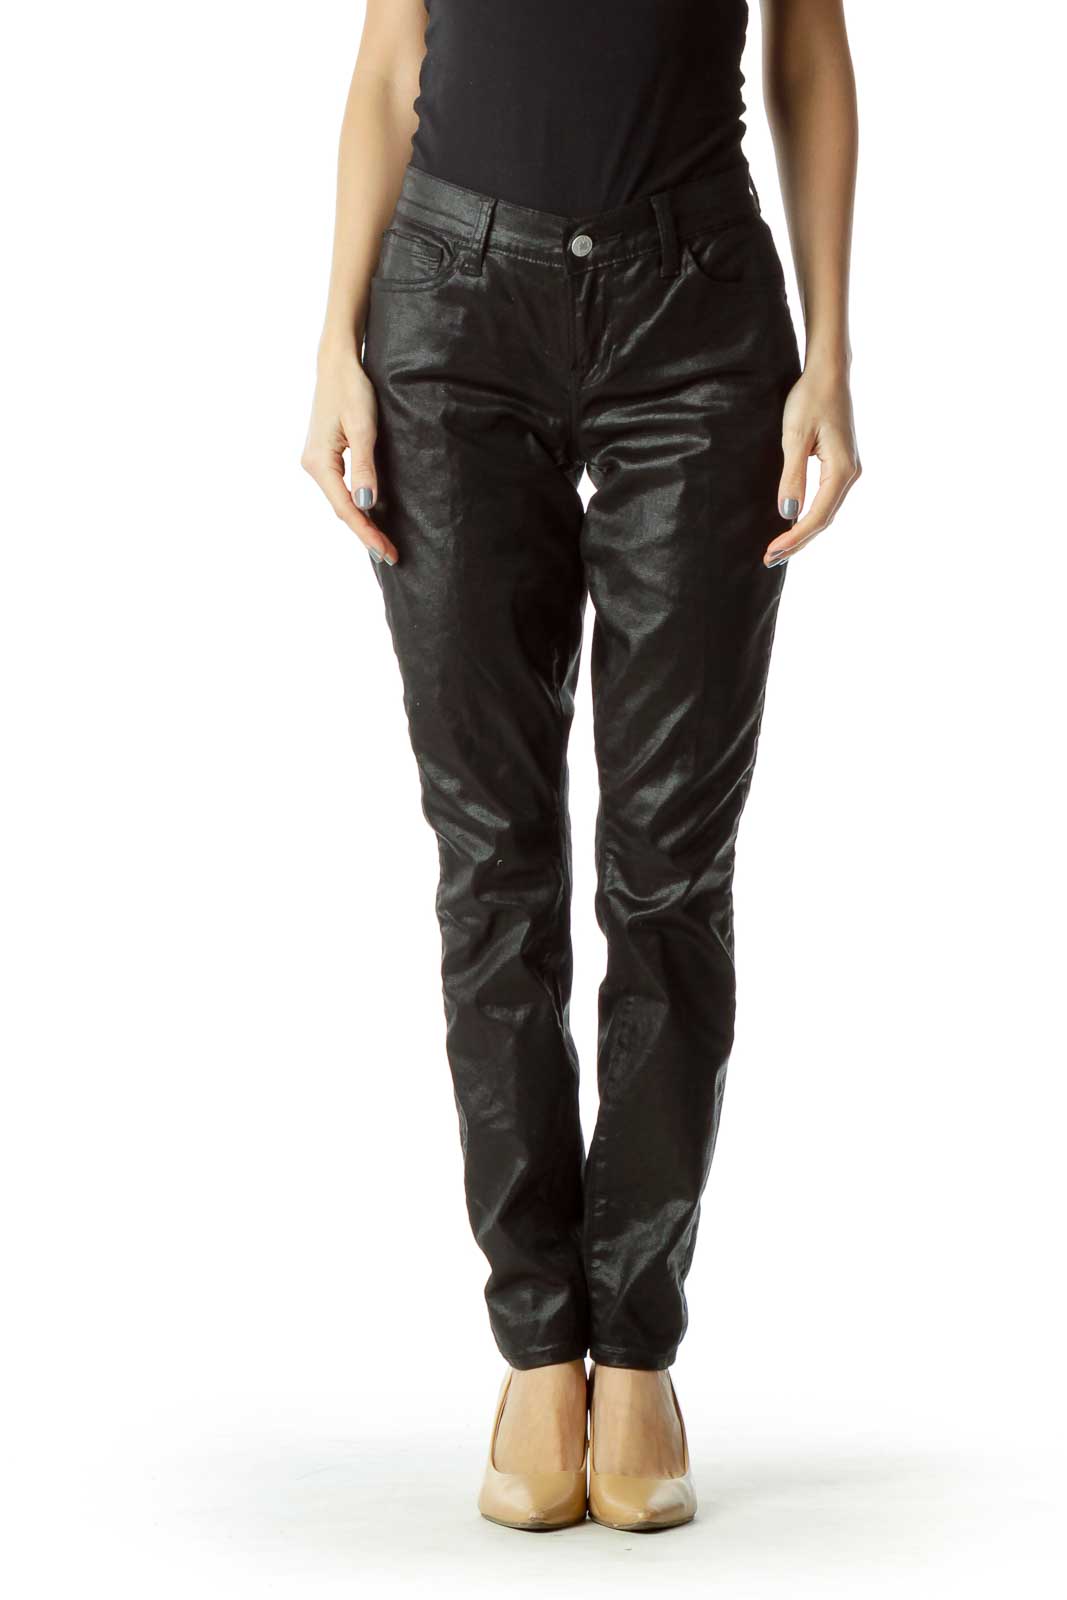 Lucky Brand - Black Metallic Skinny Jeans Cotton Spandex | SilkRoll